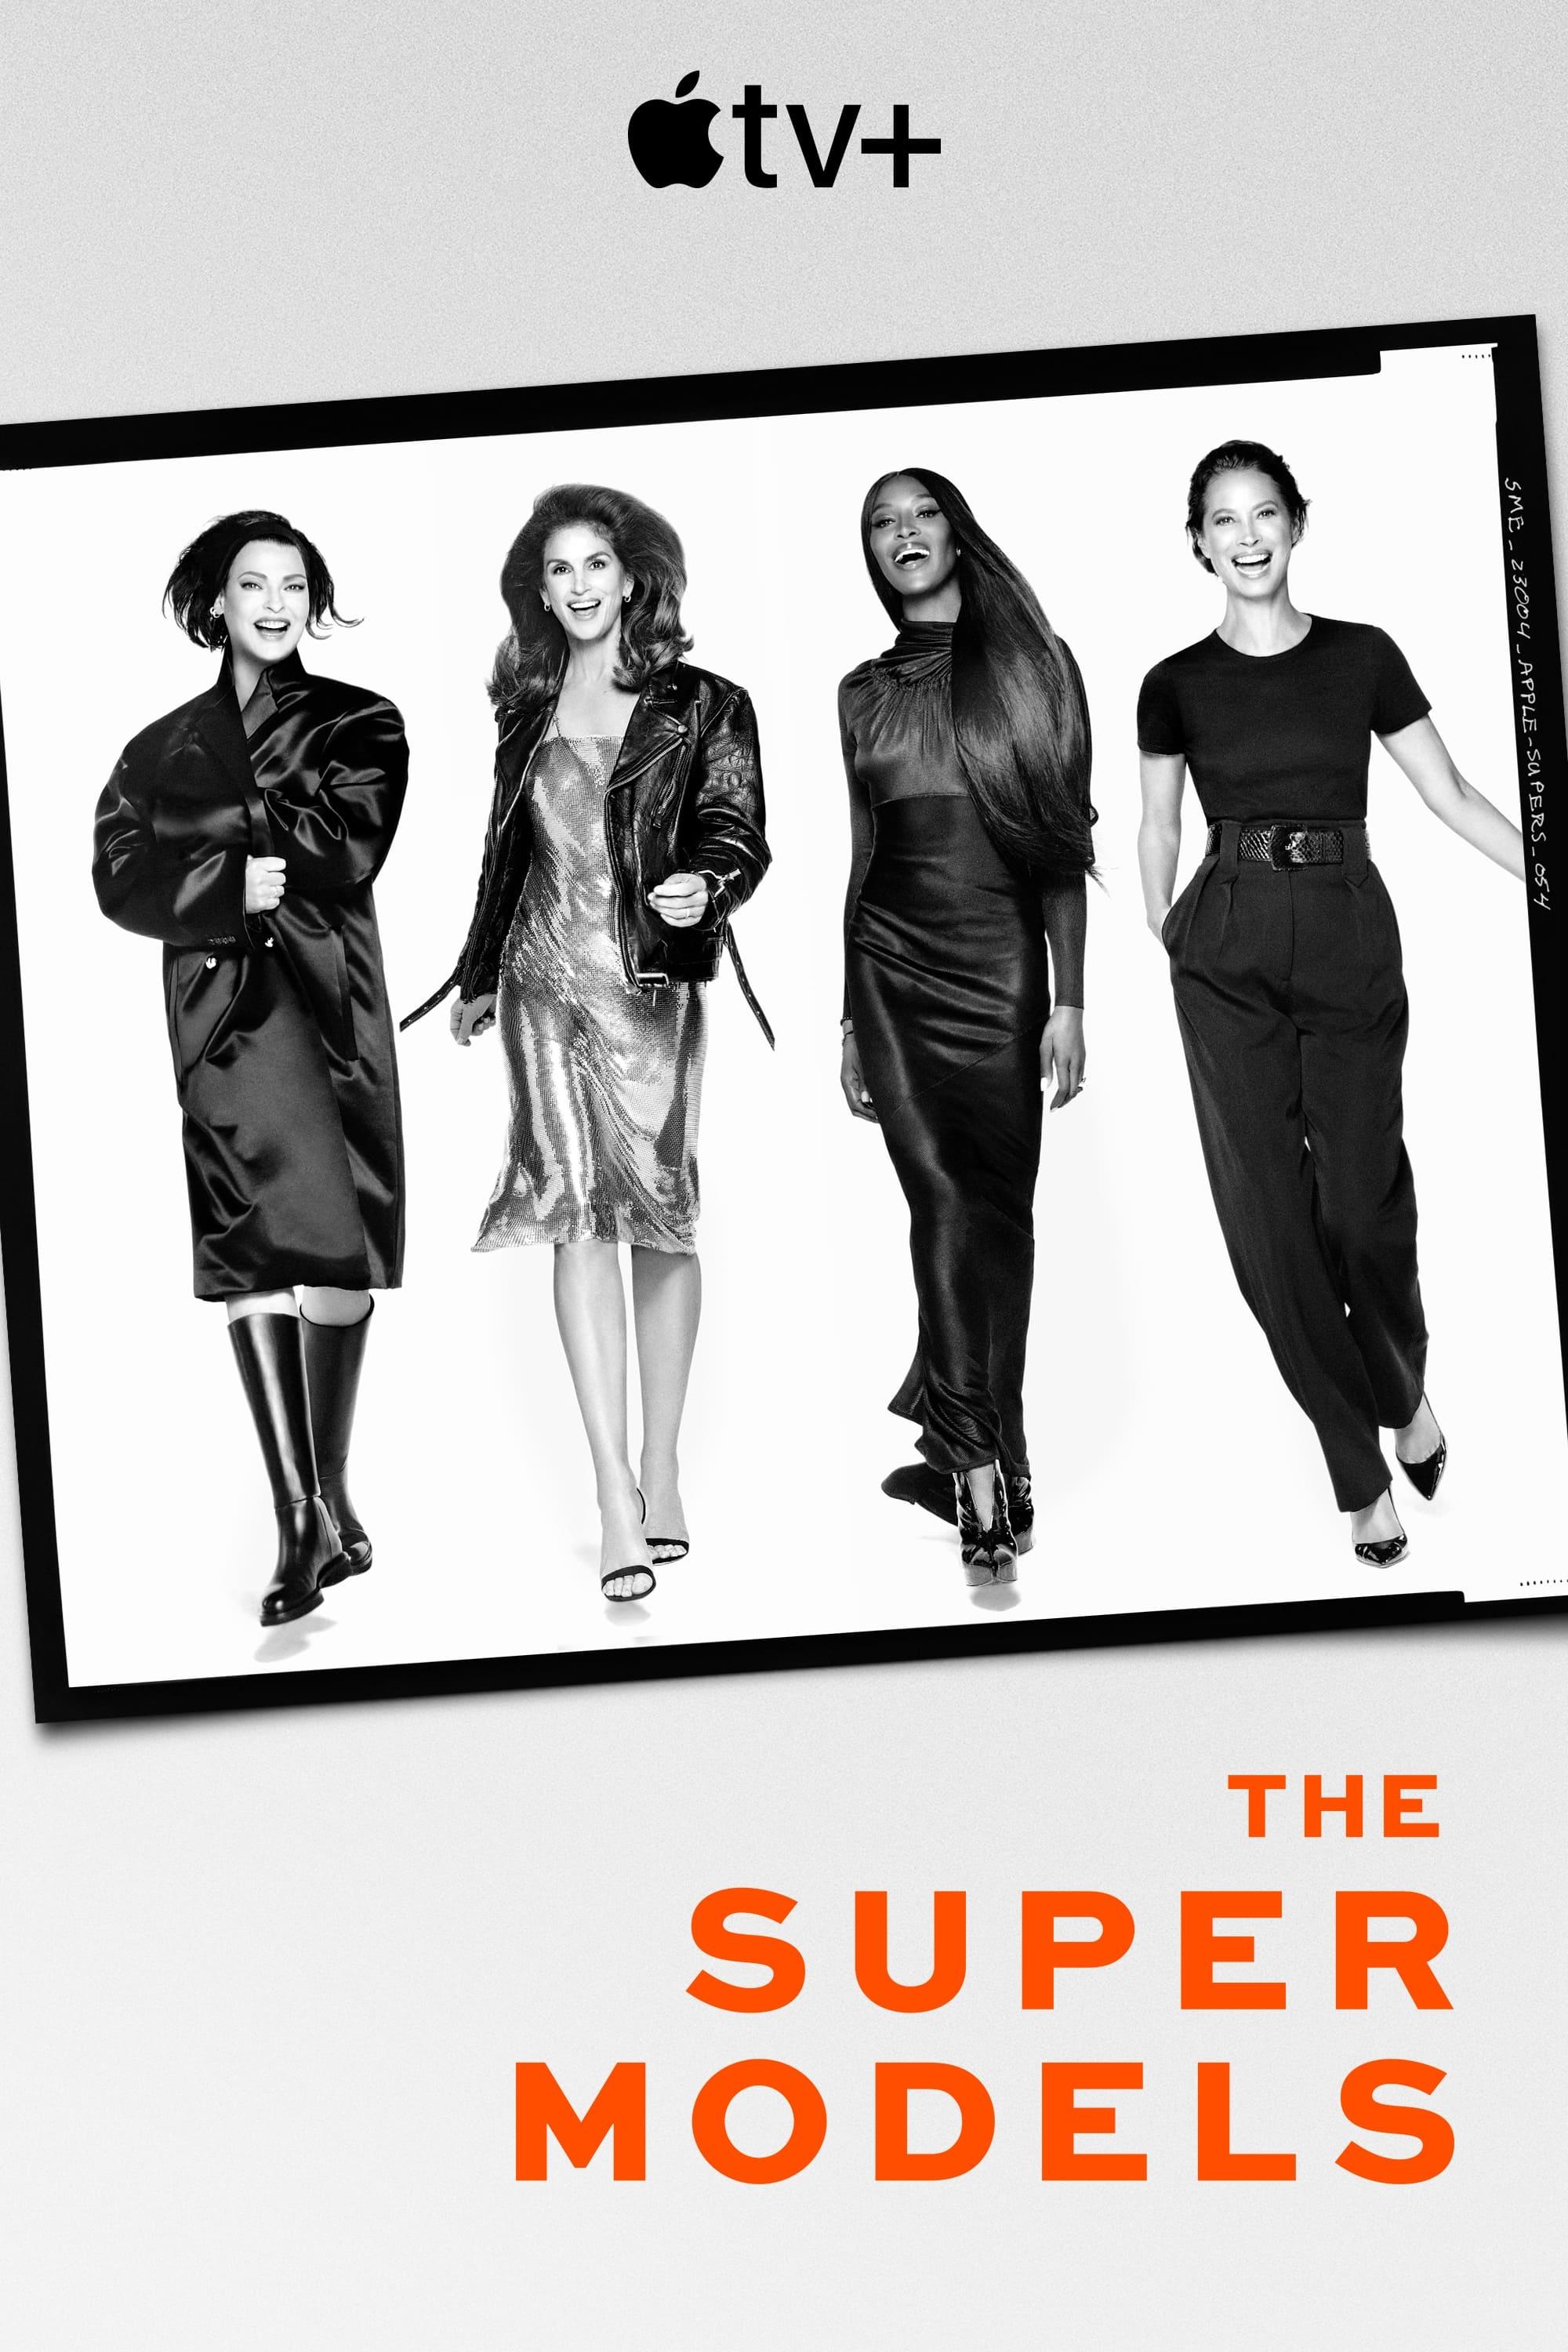 The Super Models poster